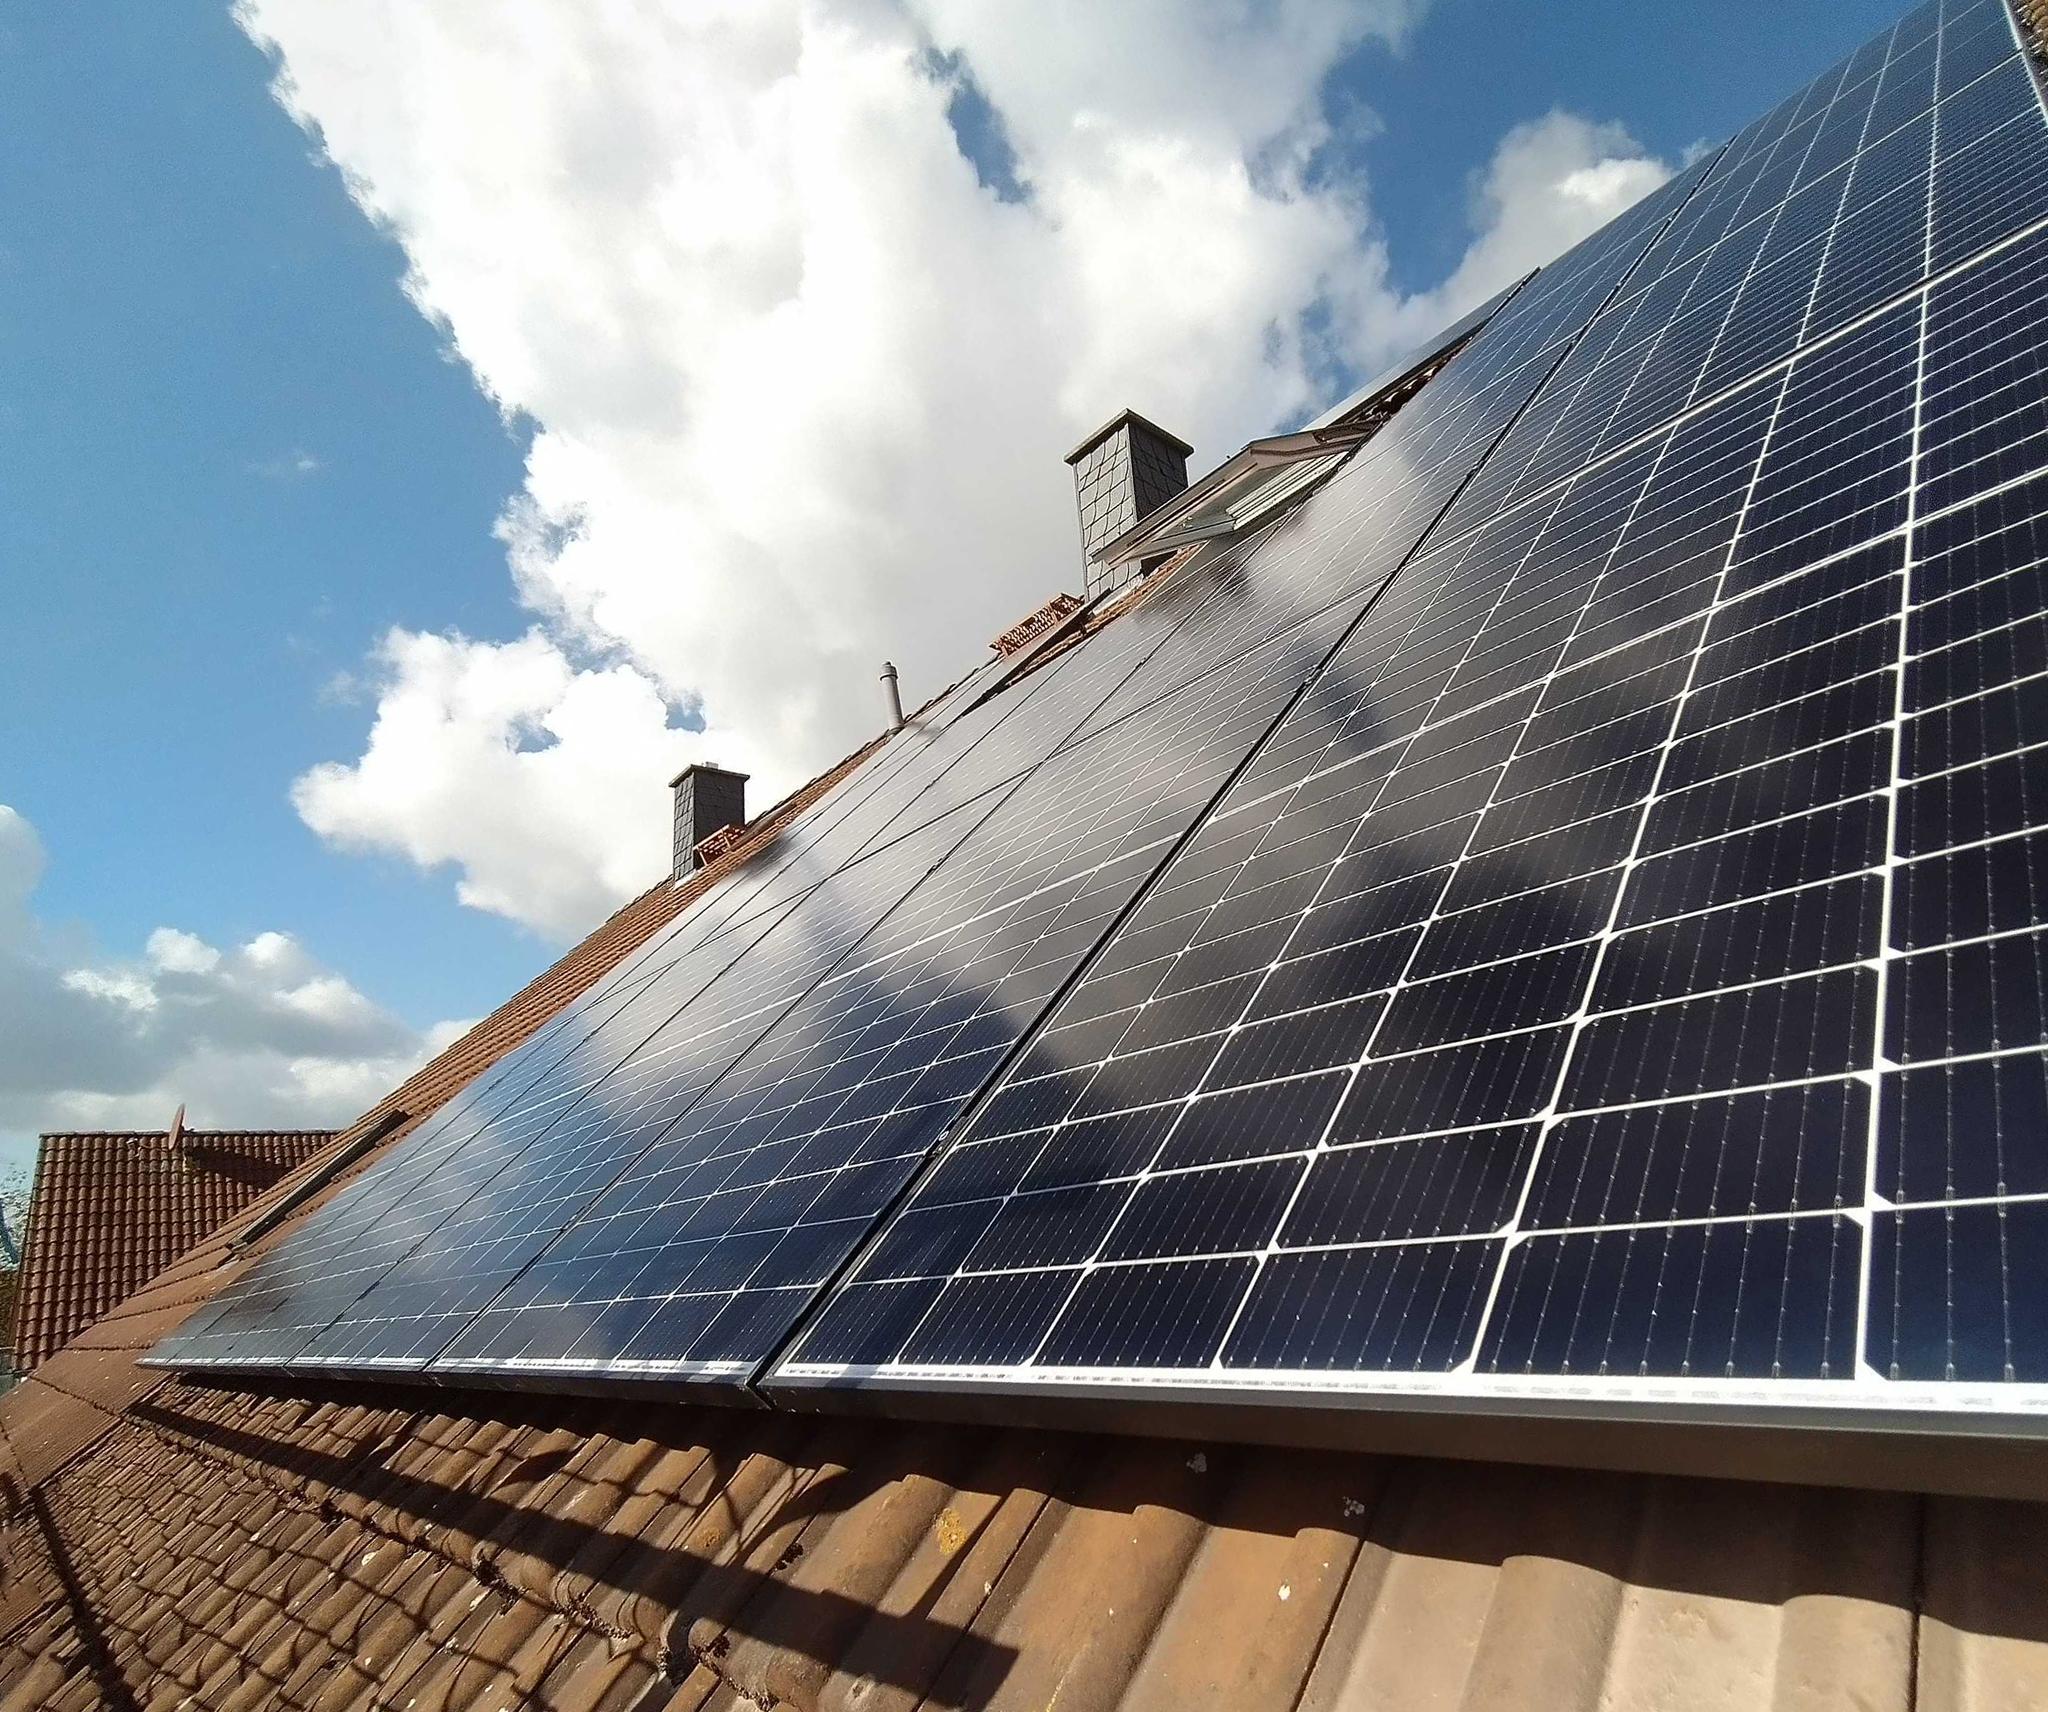 zolar PV-Module auf Hausdach - so funktioniert Photovoltaik bei bewölktem Wetter